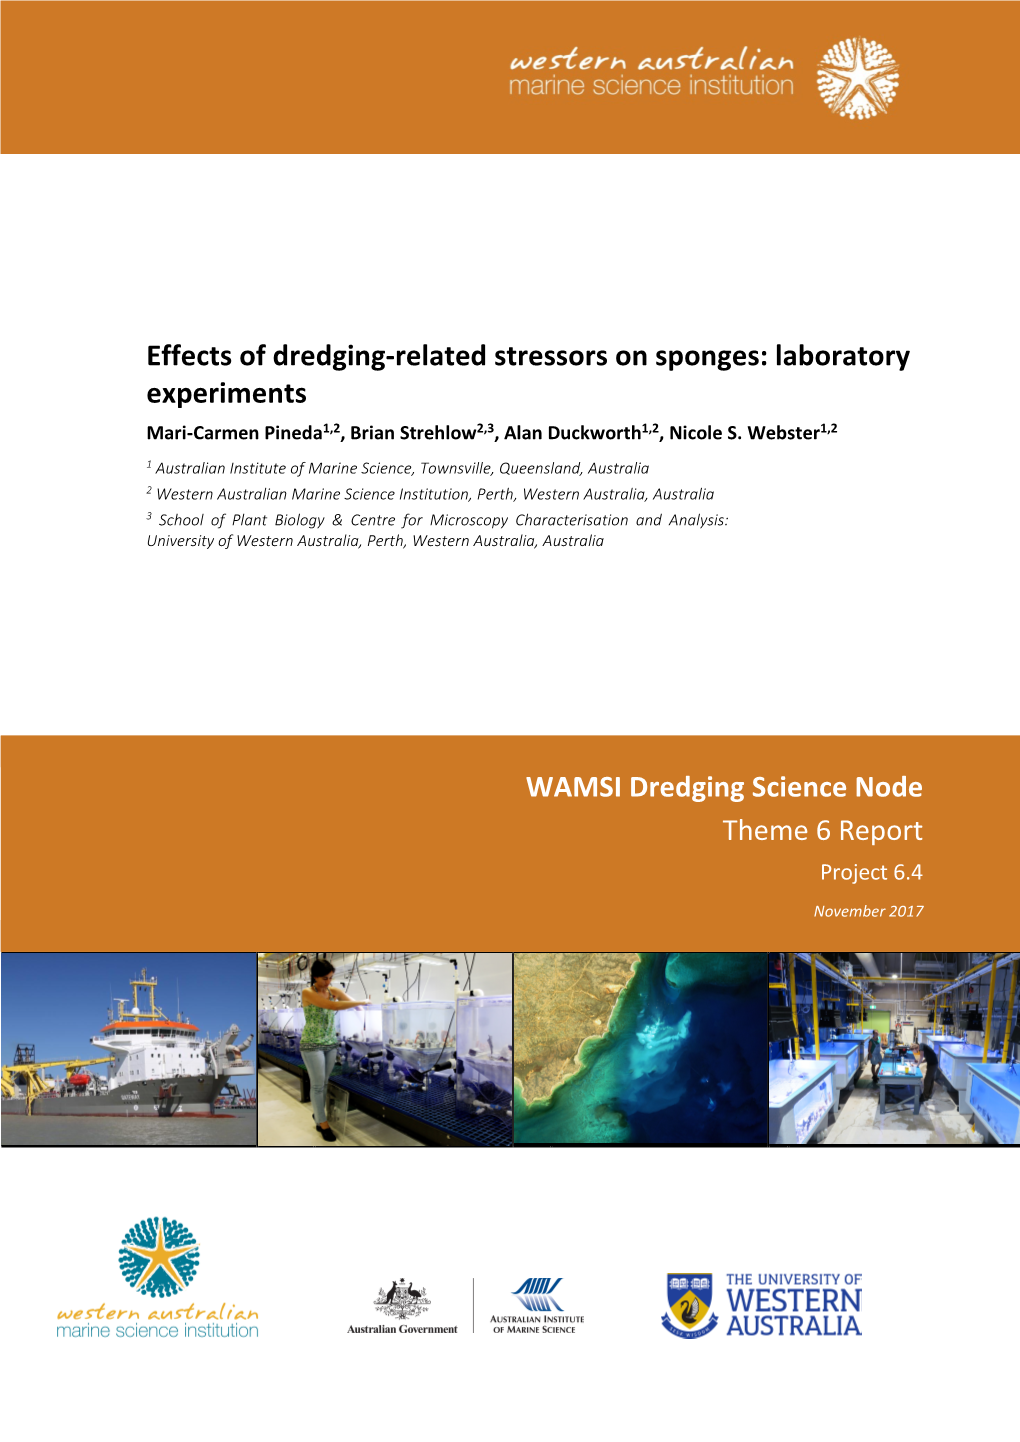 Effects of Dredging-Related Stressors on Sponges: Laboratory Experiments Mari-Carmen Pineda1,2, Brian Strehlow2,3, Alan Duckworth1,2, Nicole S